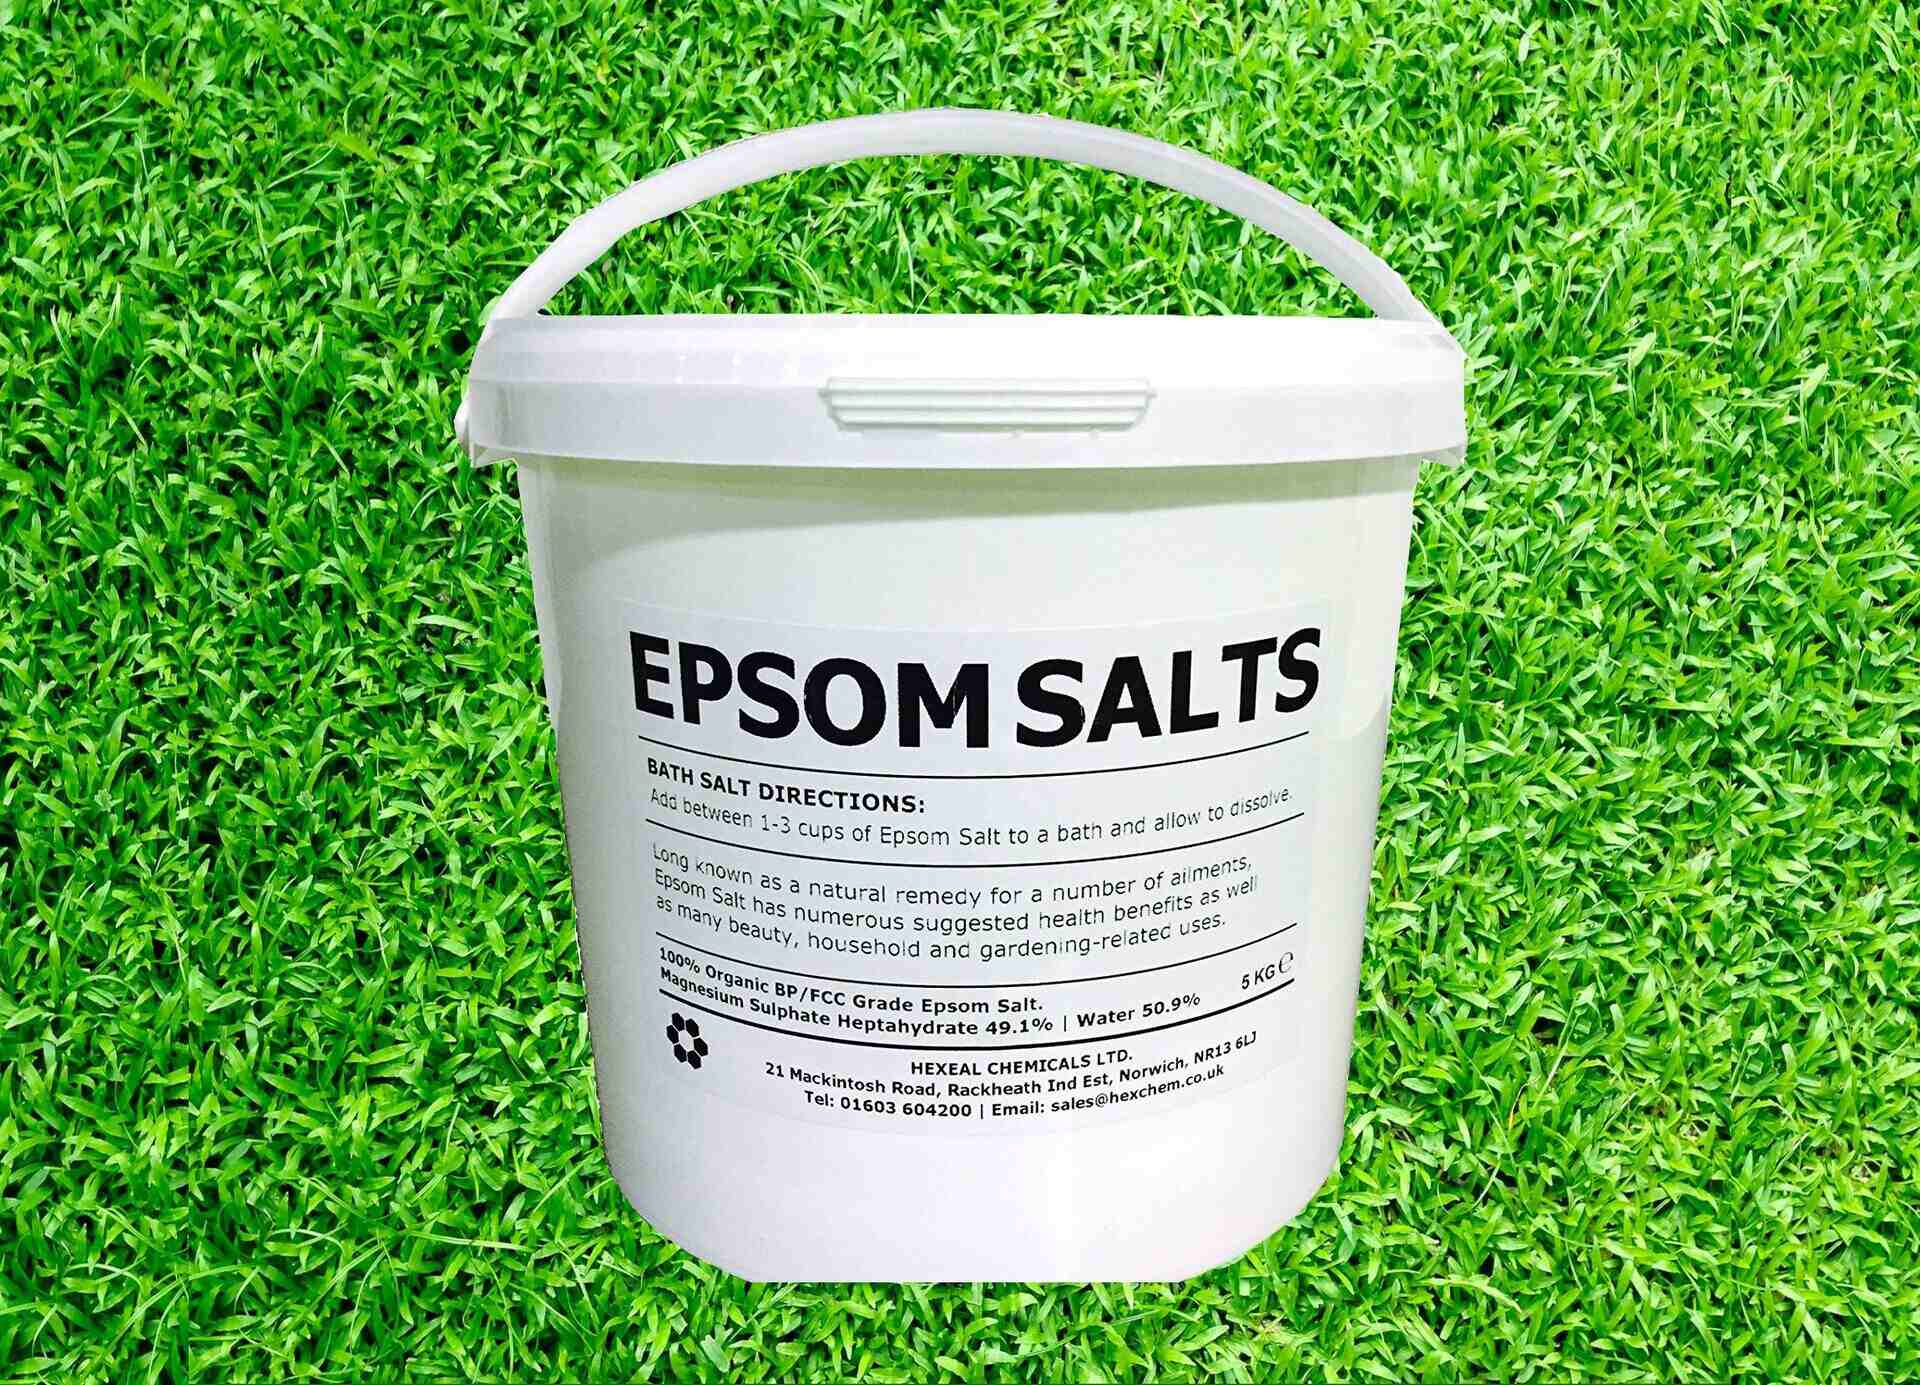 What Does Epsom Salt Do For Lawns